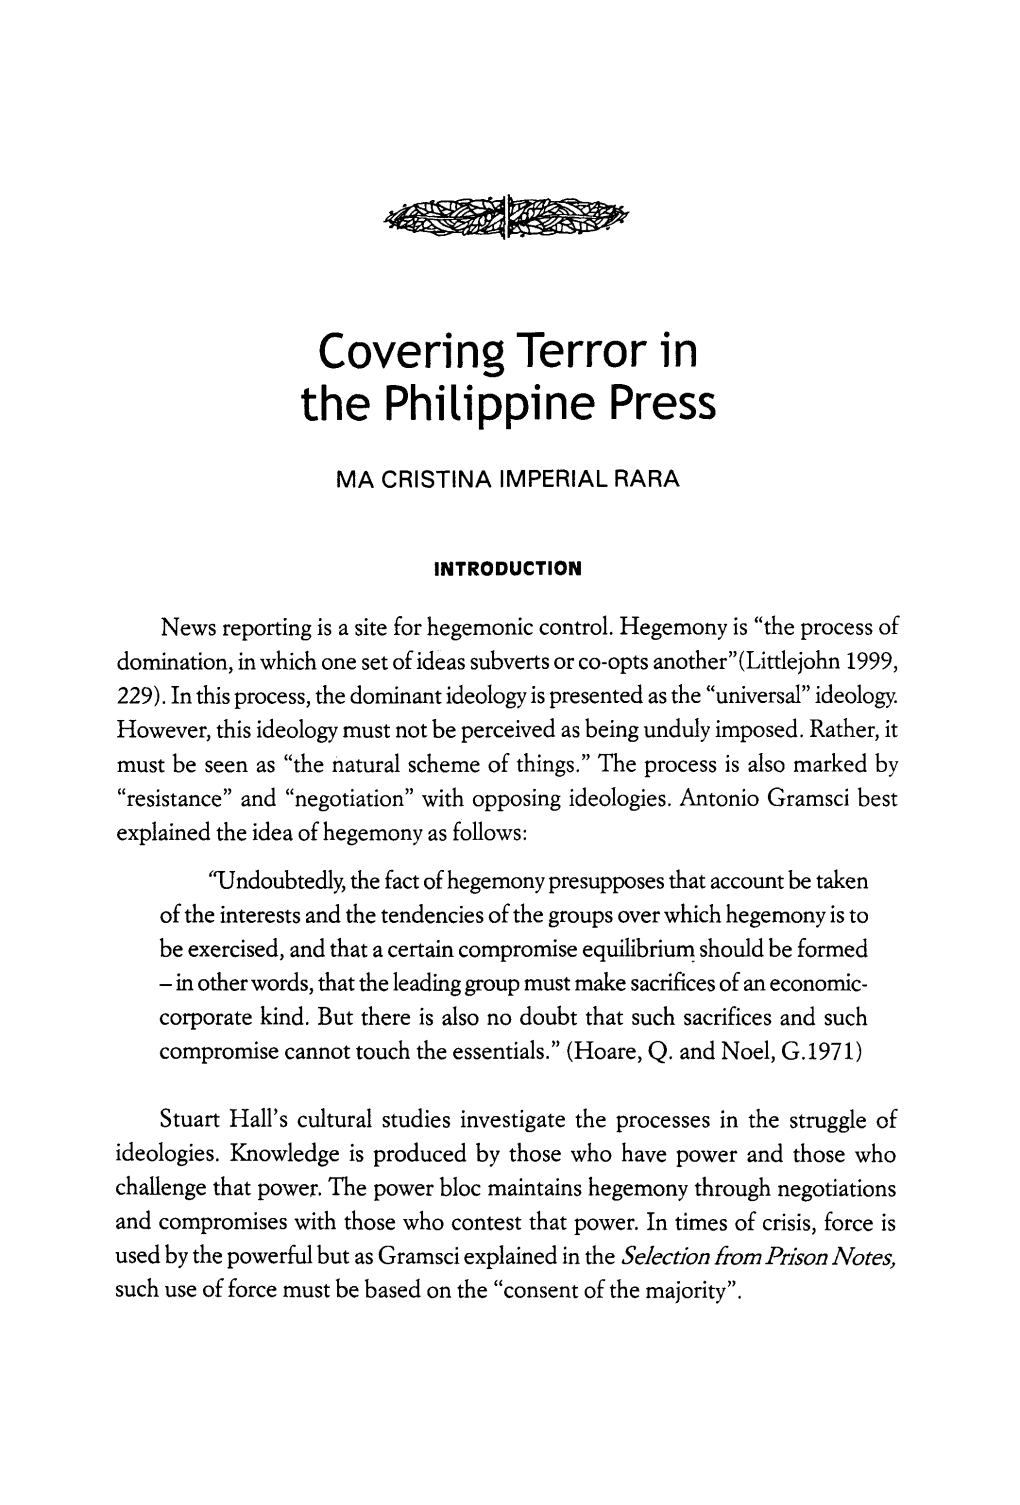 Covering Terror in the Philippine Press